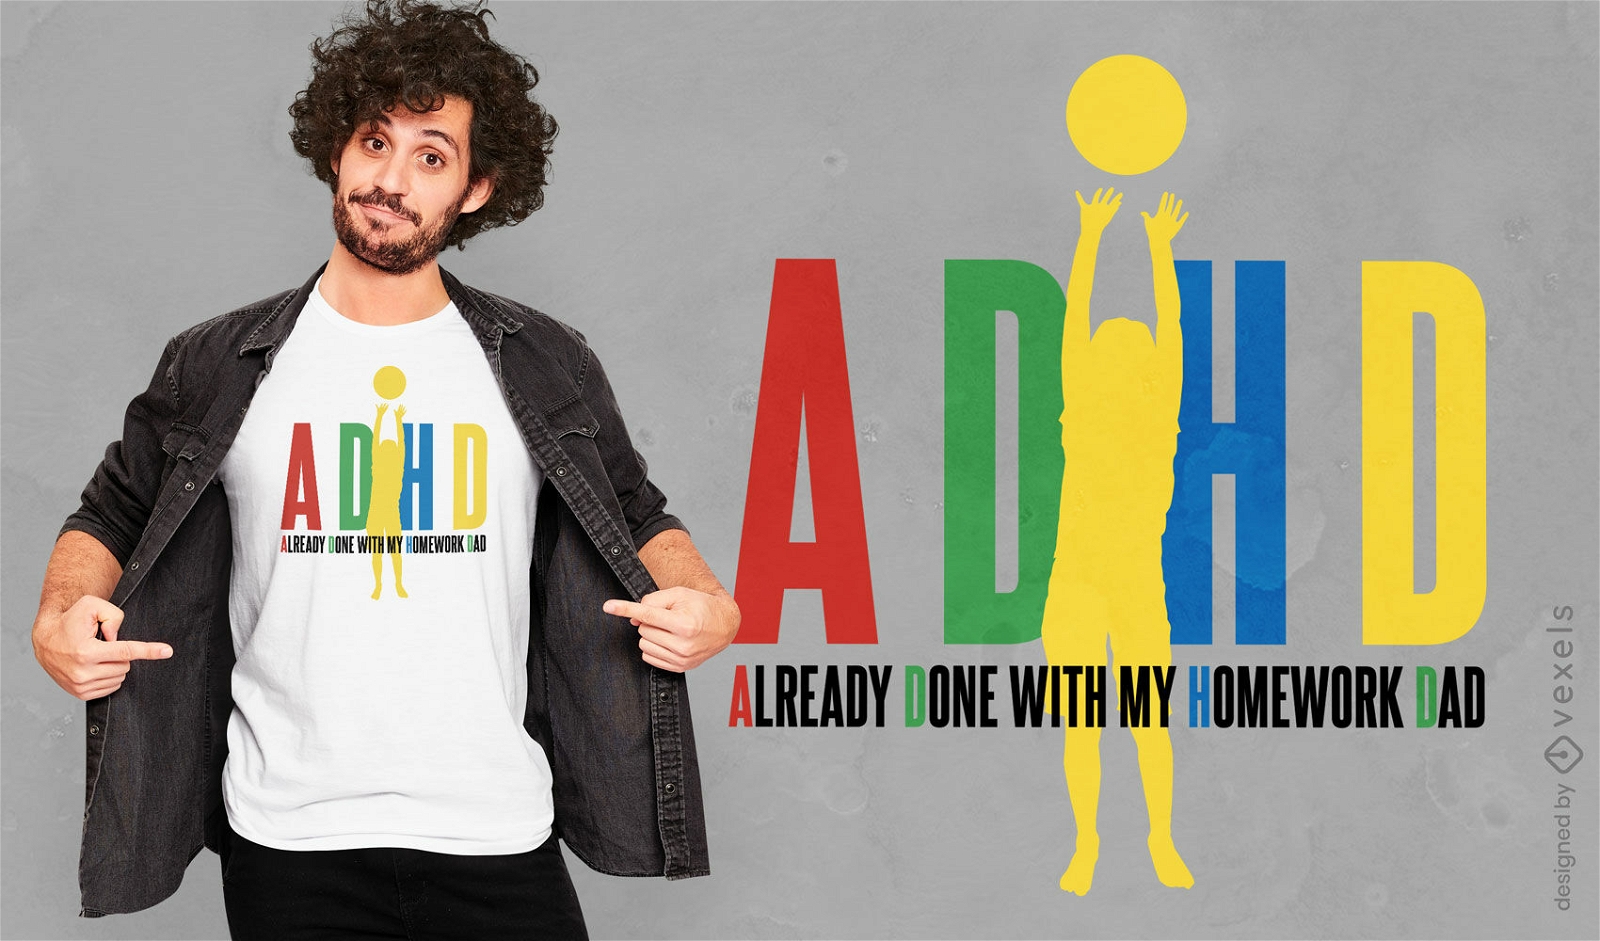 Funny ADHD kid t-shirt design